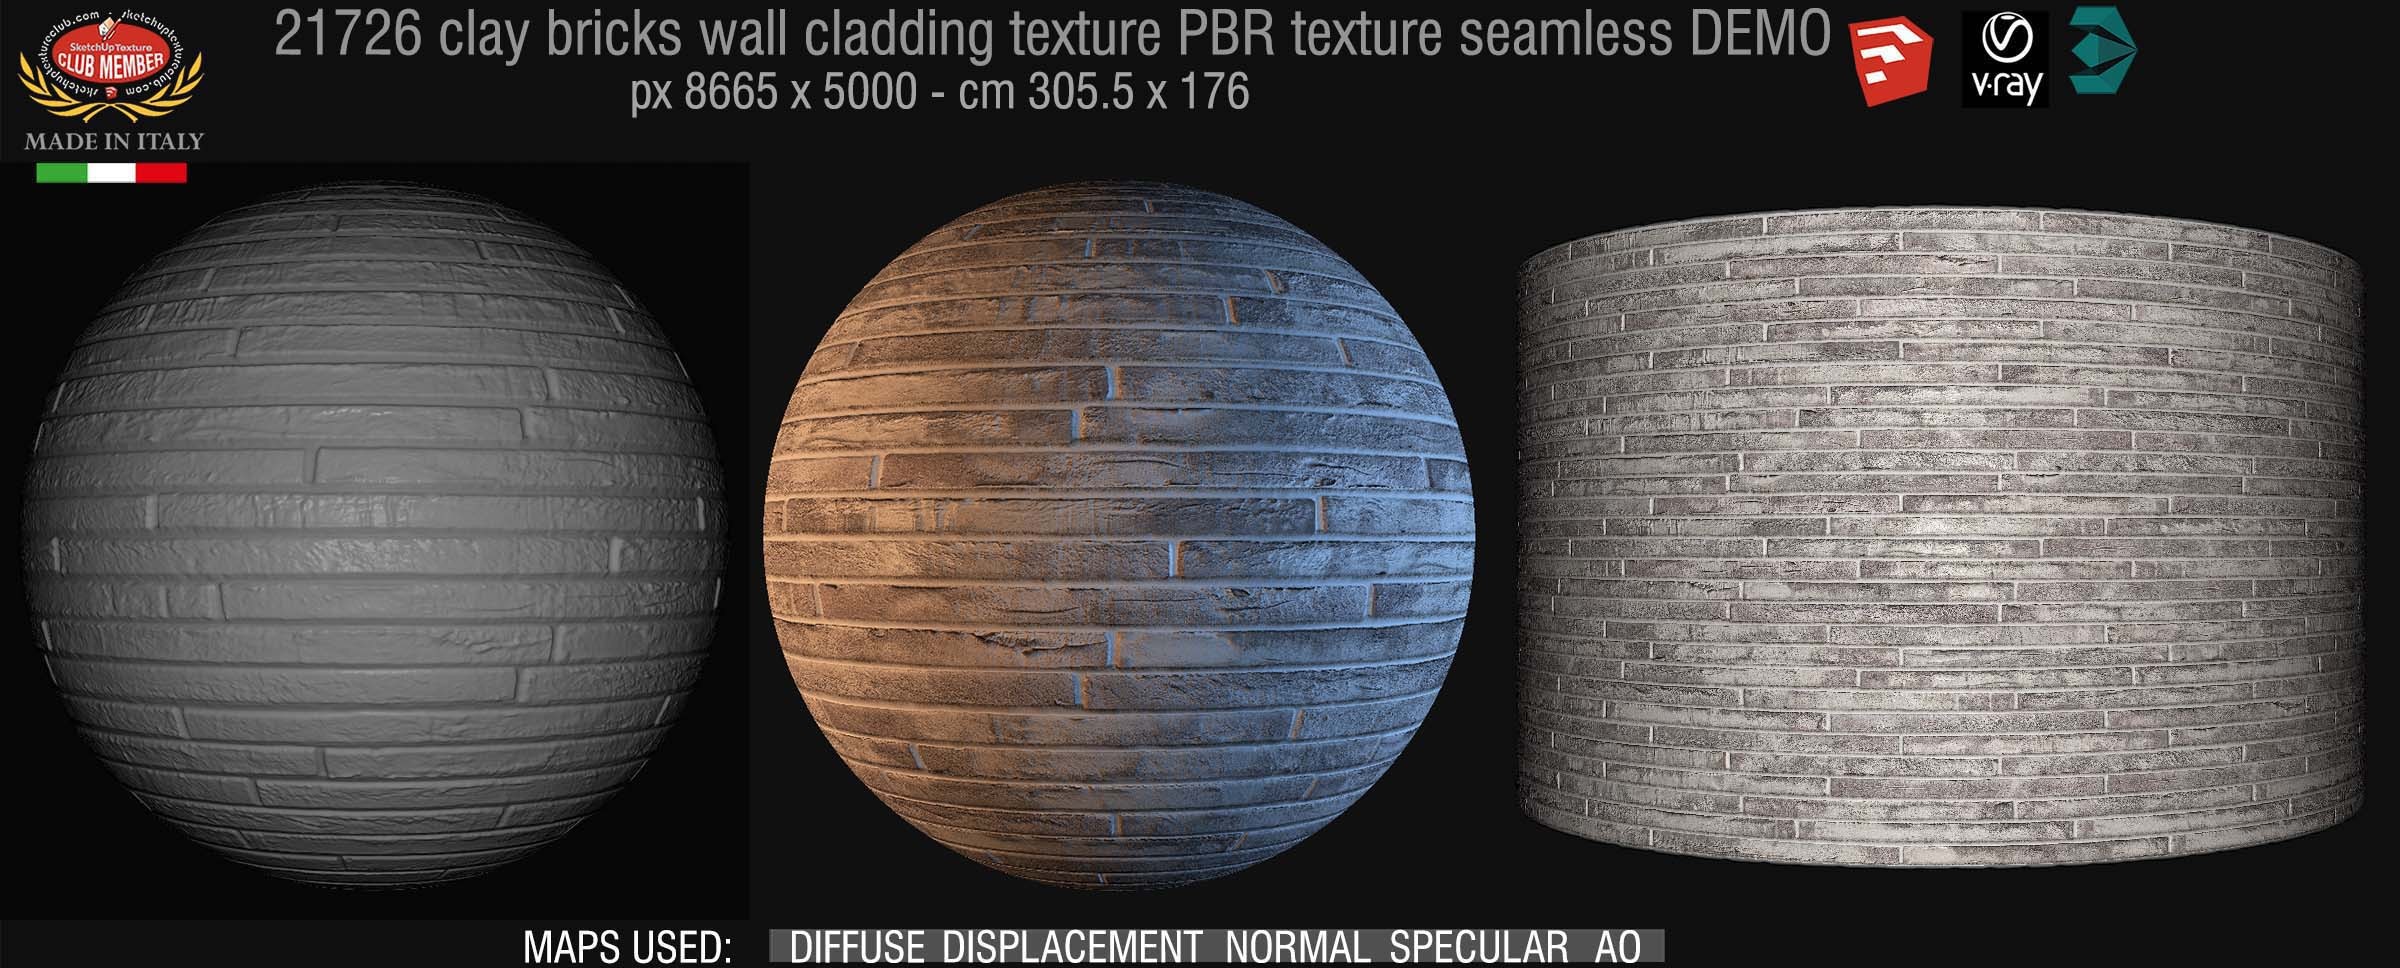 21726 Clay bricks wall cladding PBR texture seamless DEMO